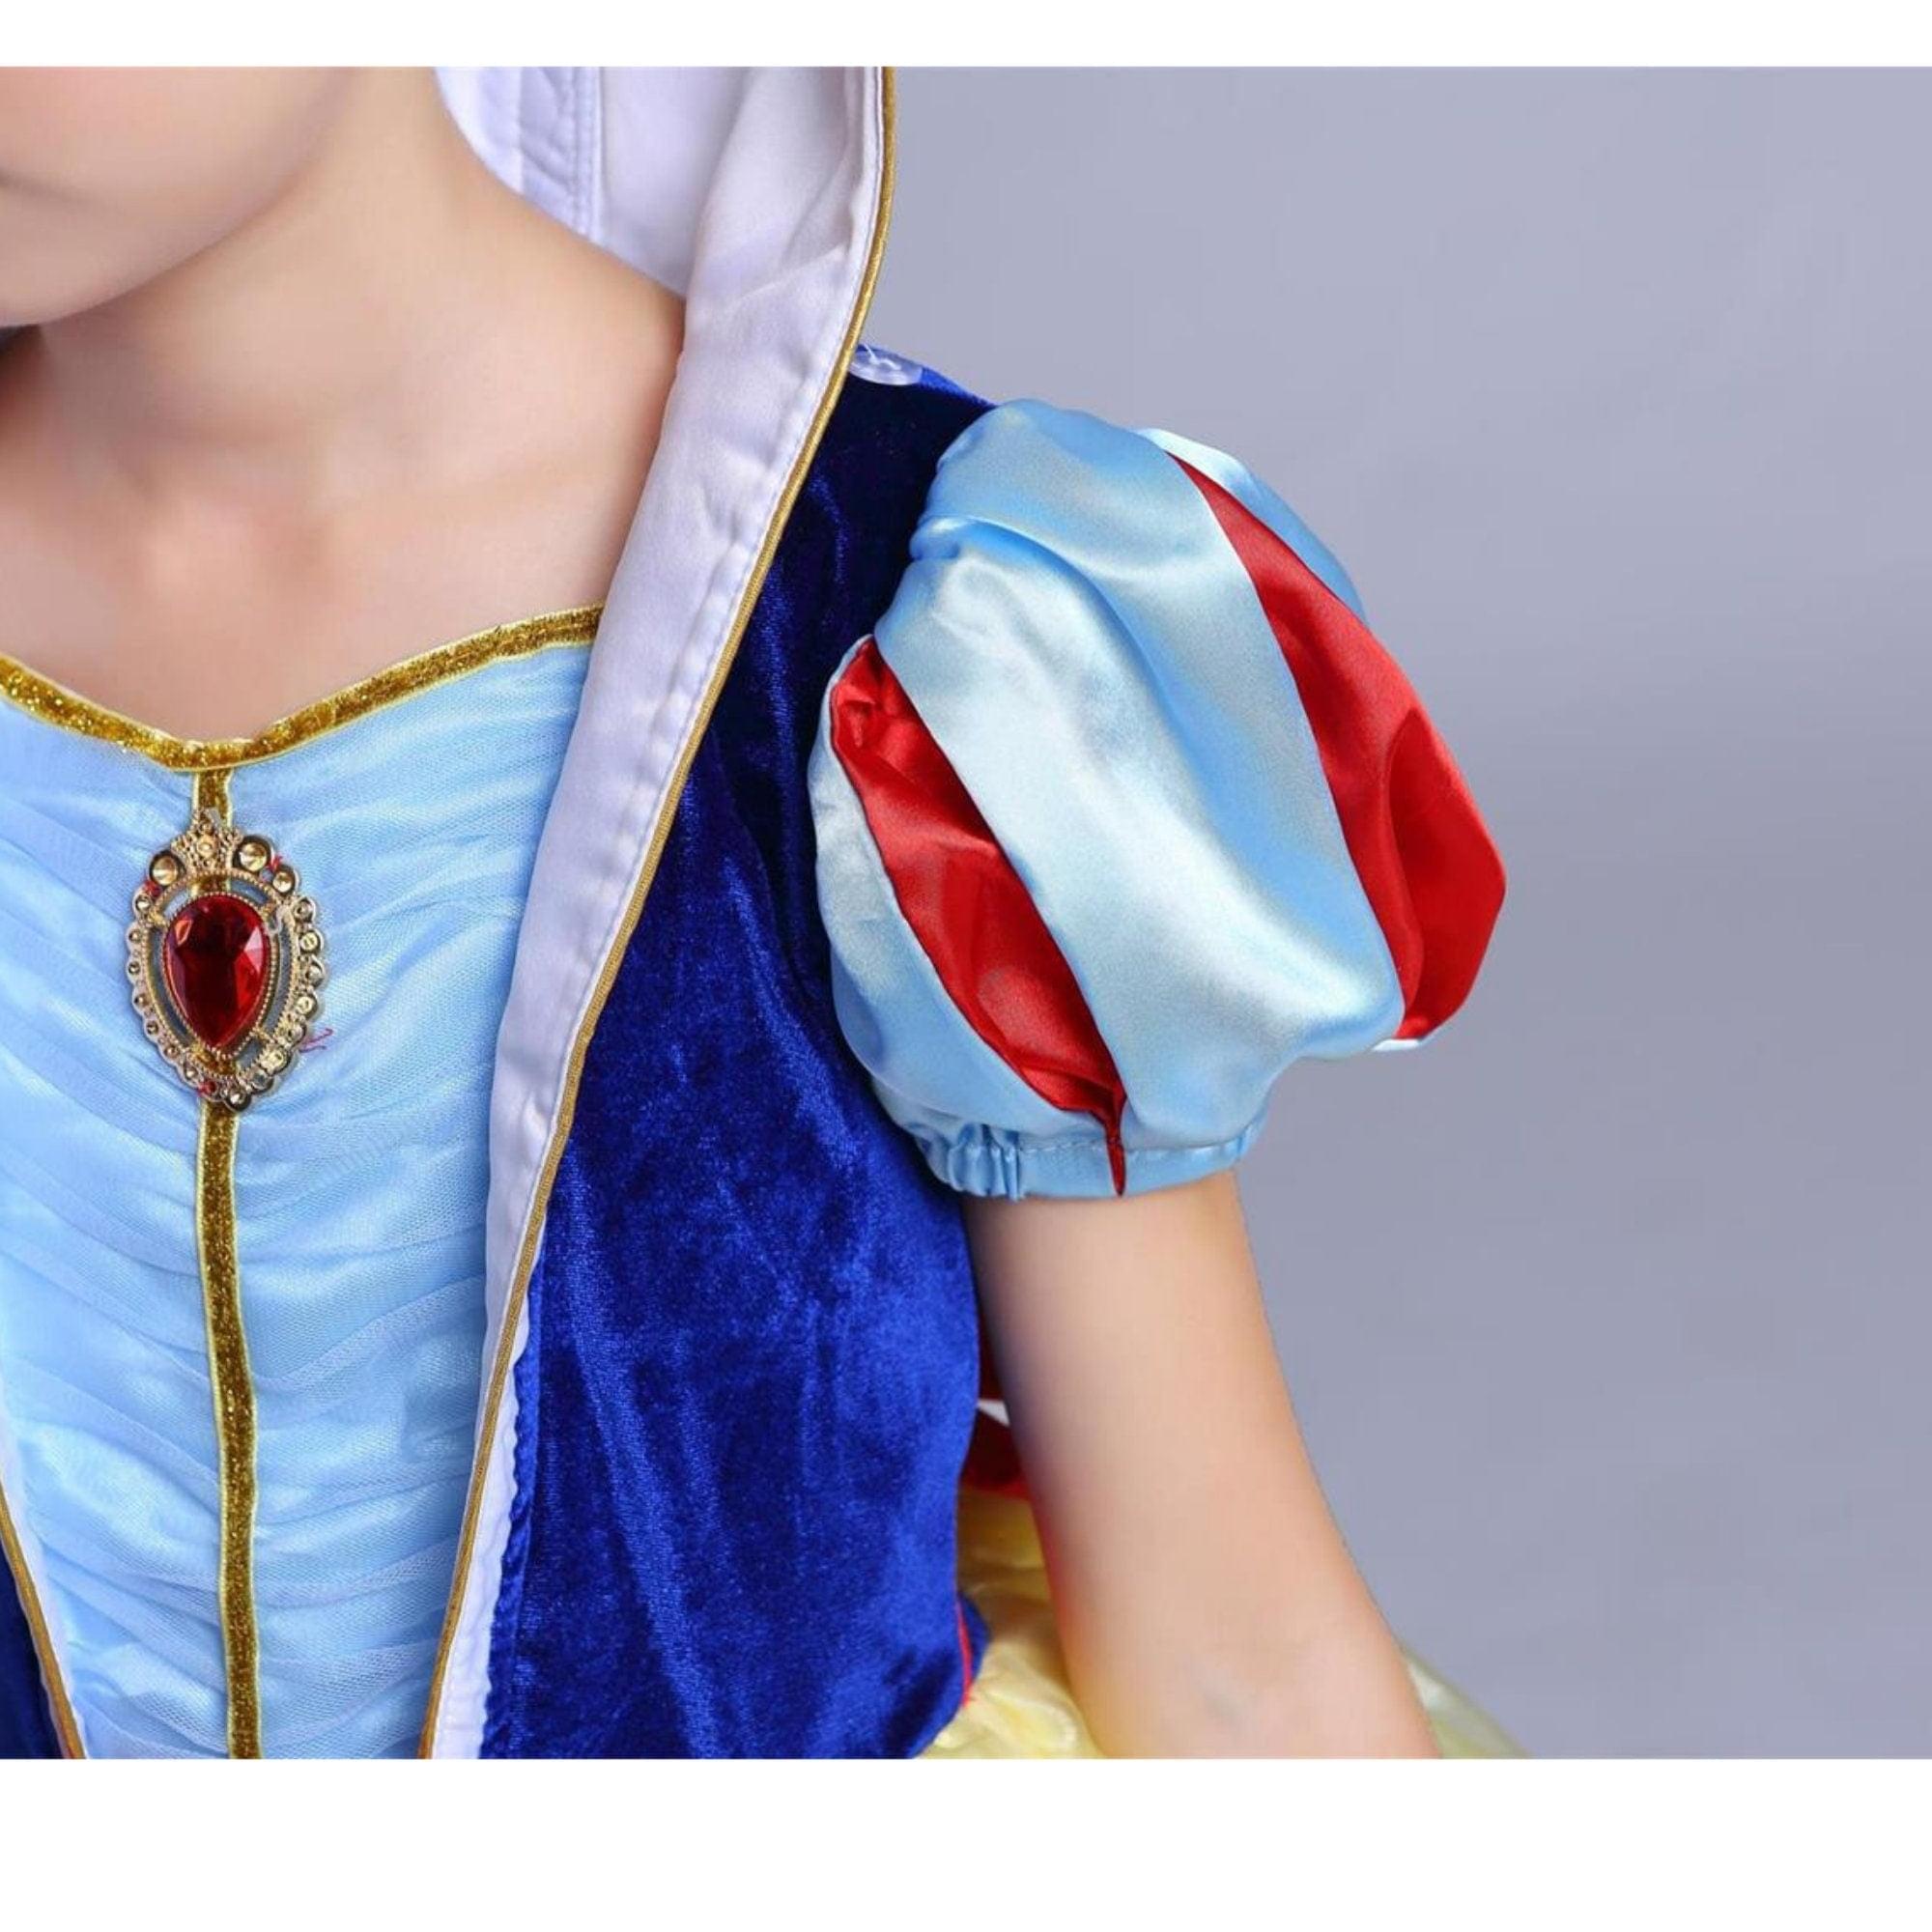 Disney-Inspired Snow White Deluxe Costume for Dress Up or Birthday